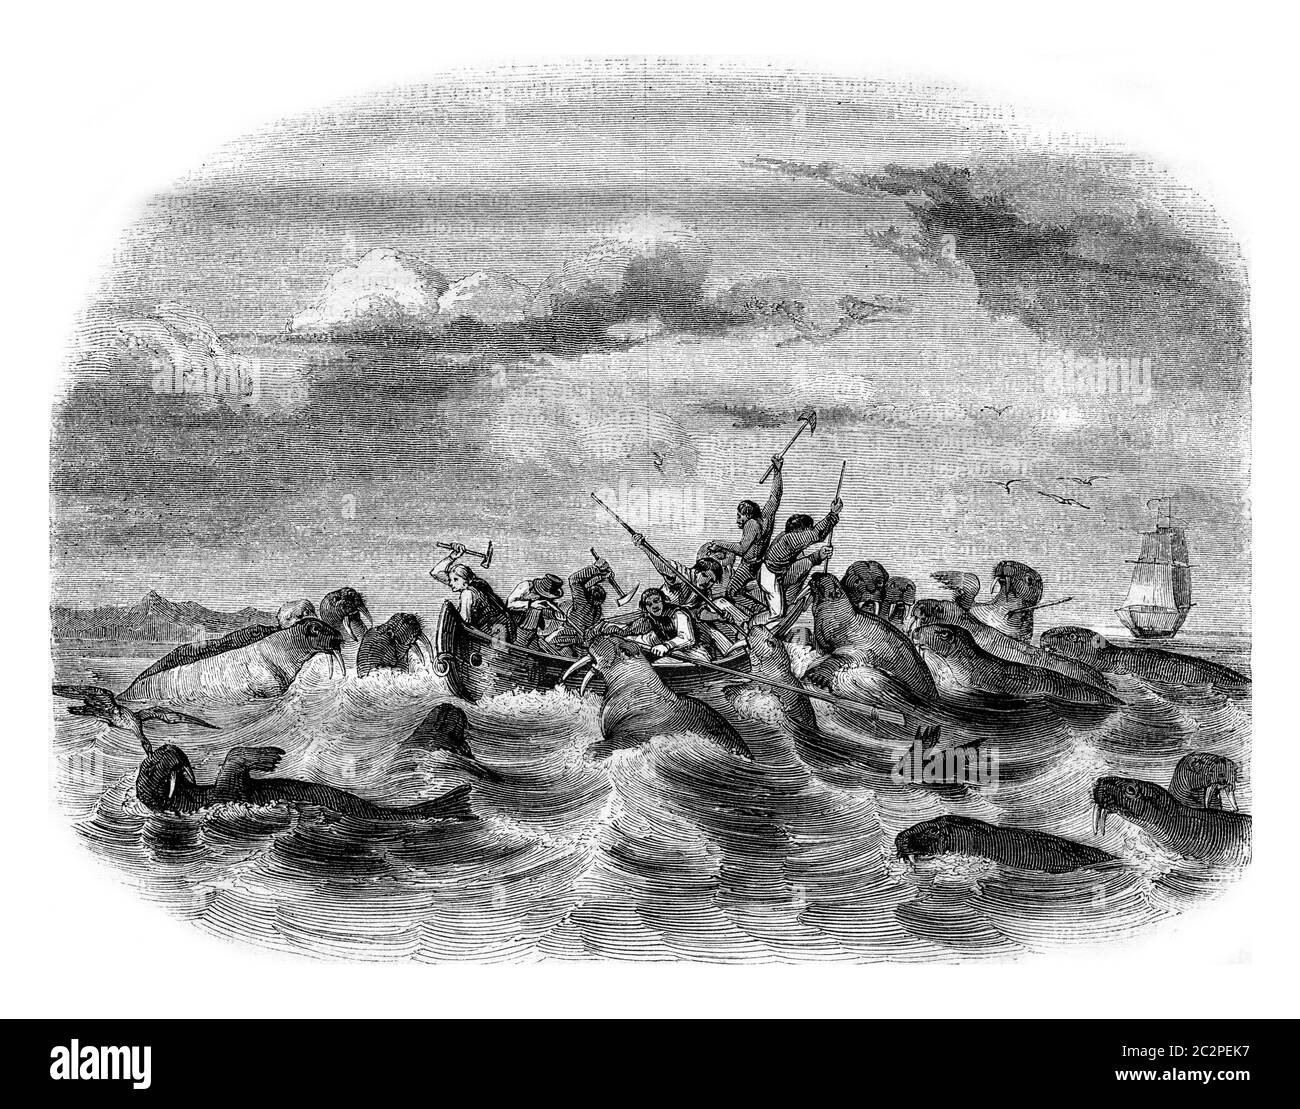 Kampf gegen Matrosen Walrosse, Vintage gravierte Illustration. Magasin Pittoresque 1843. Stockfoto